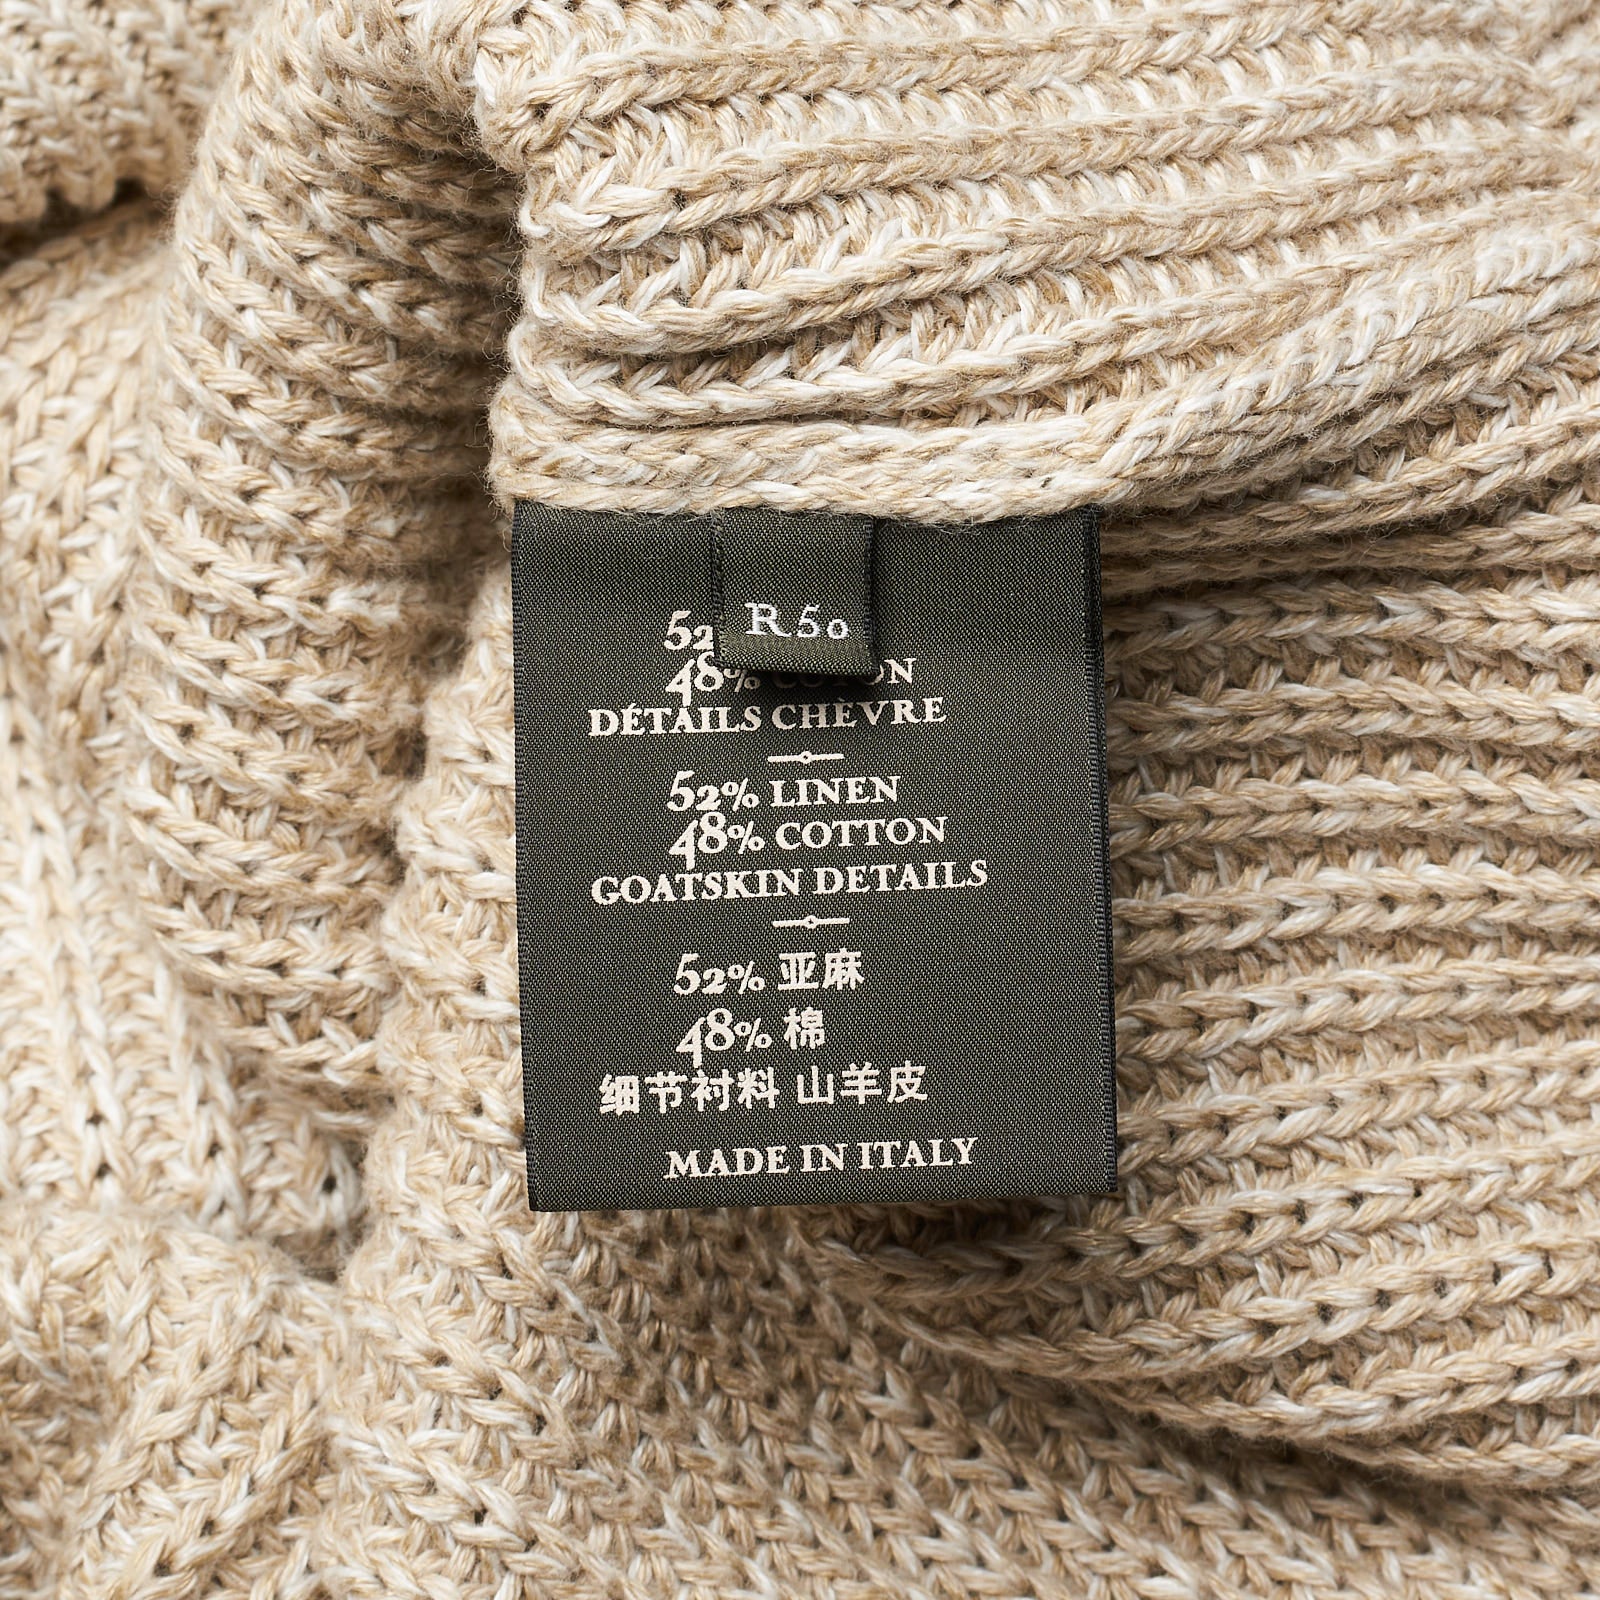 BERLUTI Paris Beige Linen-Cotton Knit Crewneck Sweater R50 NEW US M BERLUTI